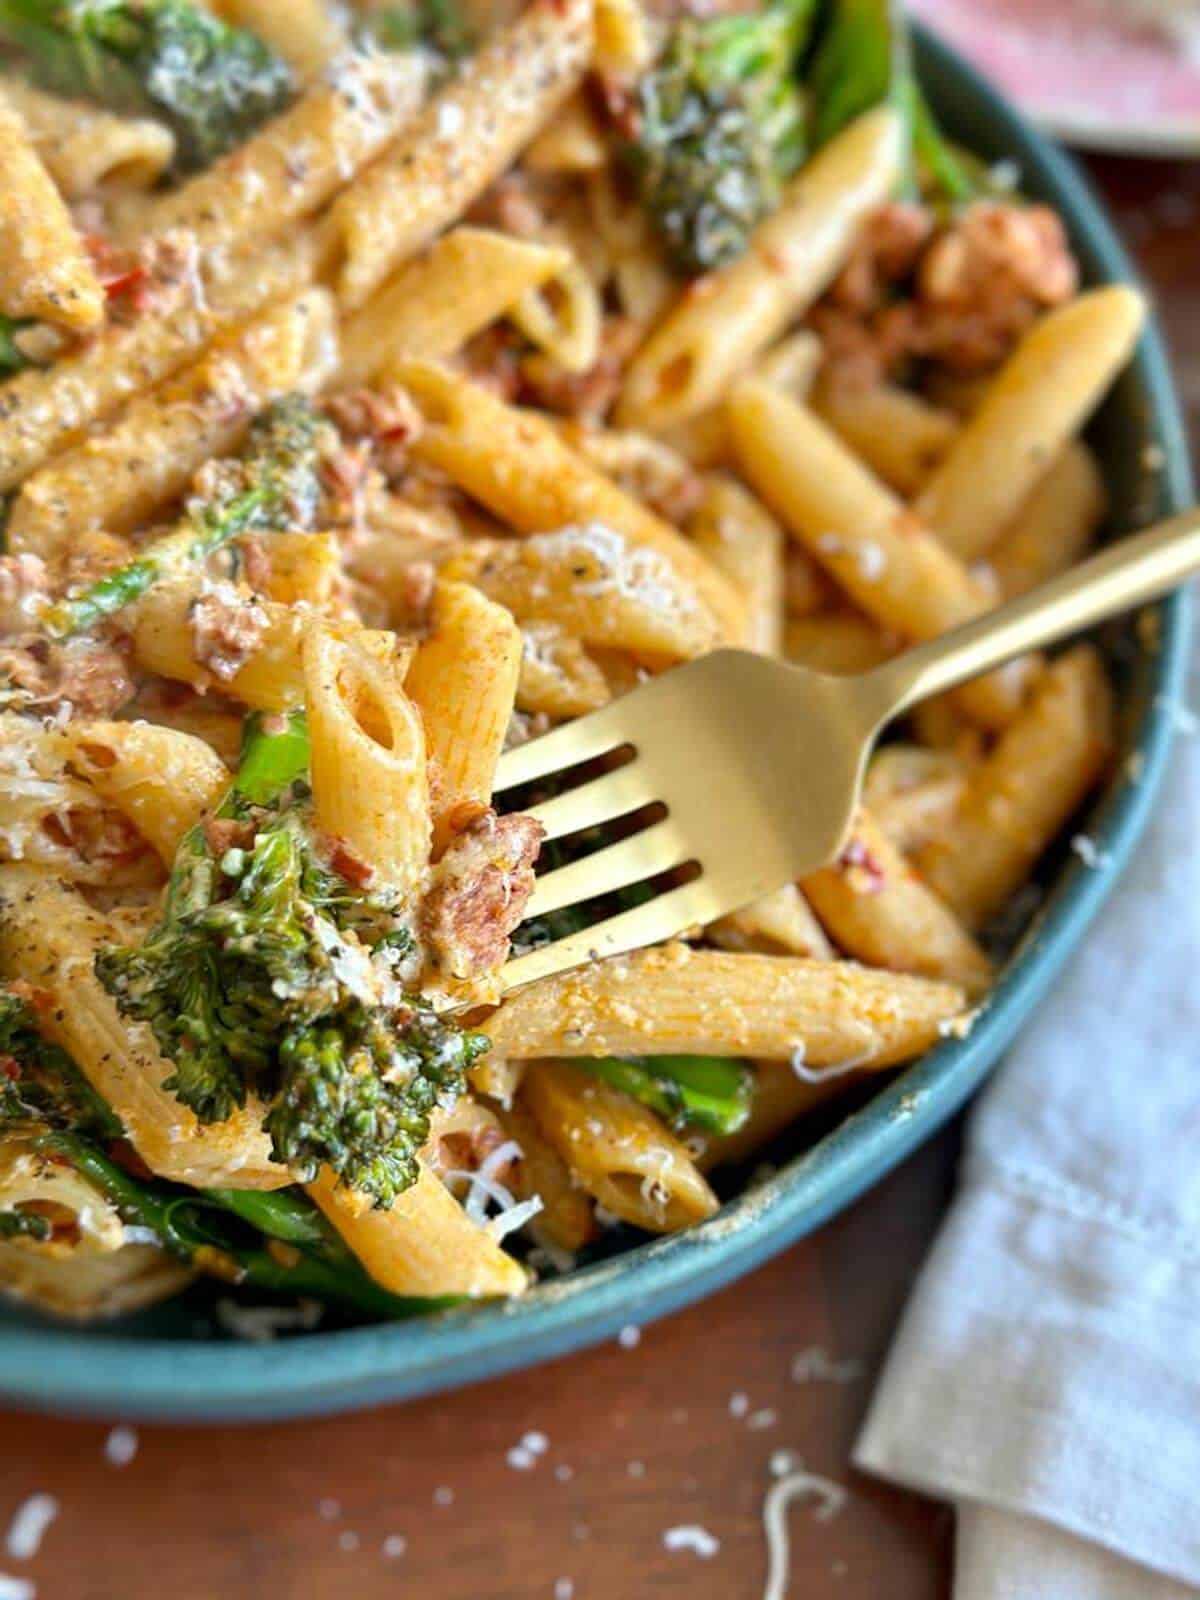 A-forkful-of-pasta-and-broccilini.